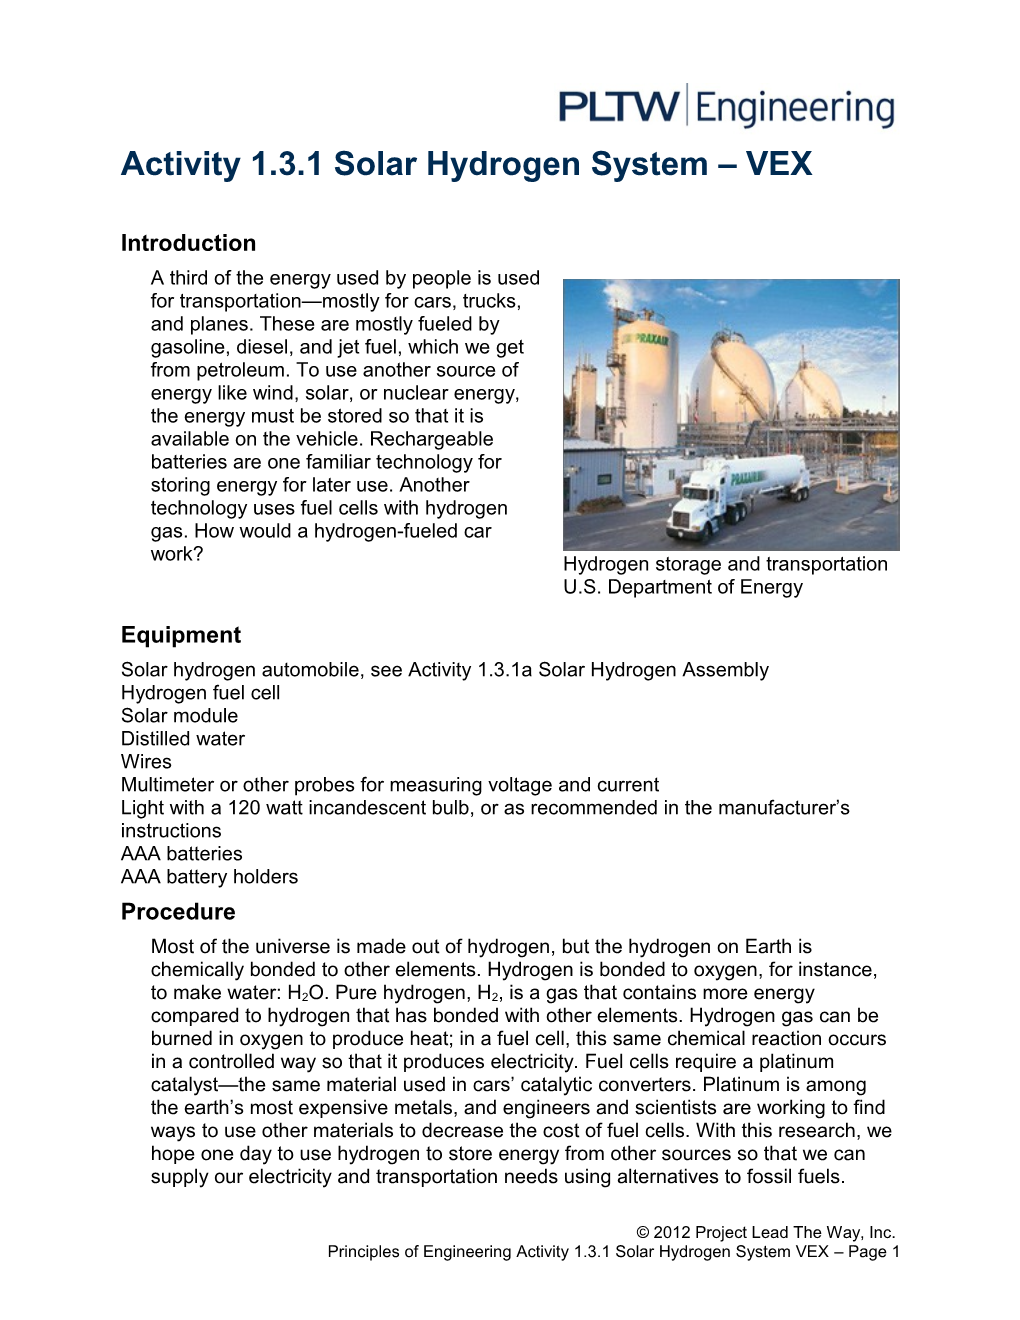 Activity 1.3.1 Solar Hydrogen System VEX